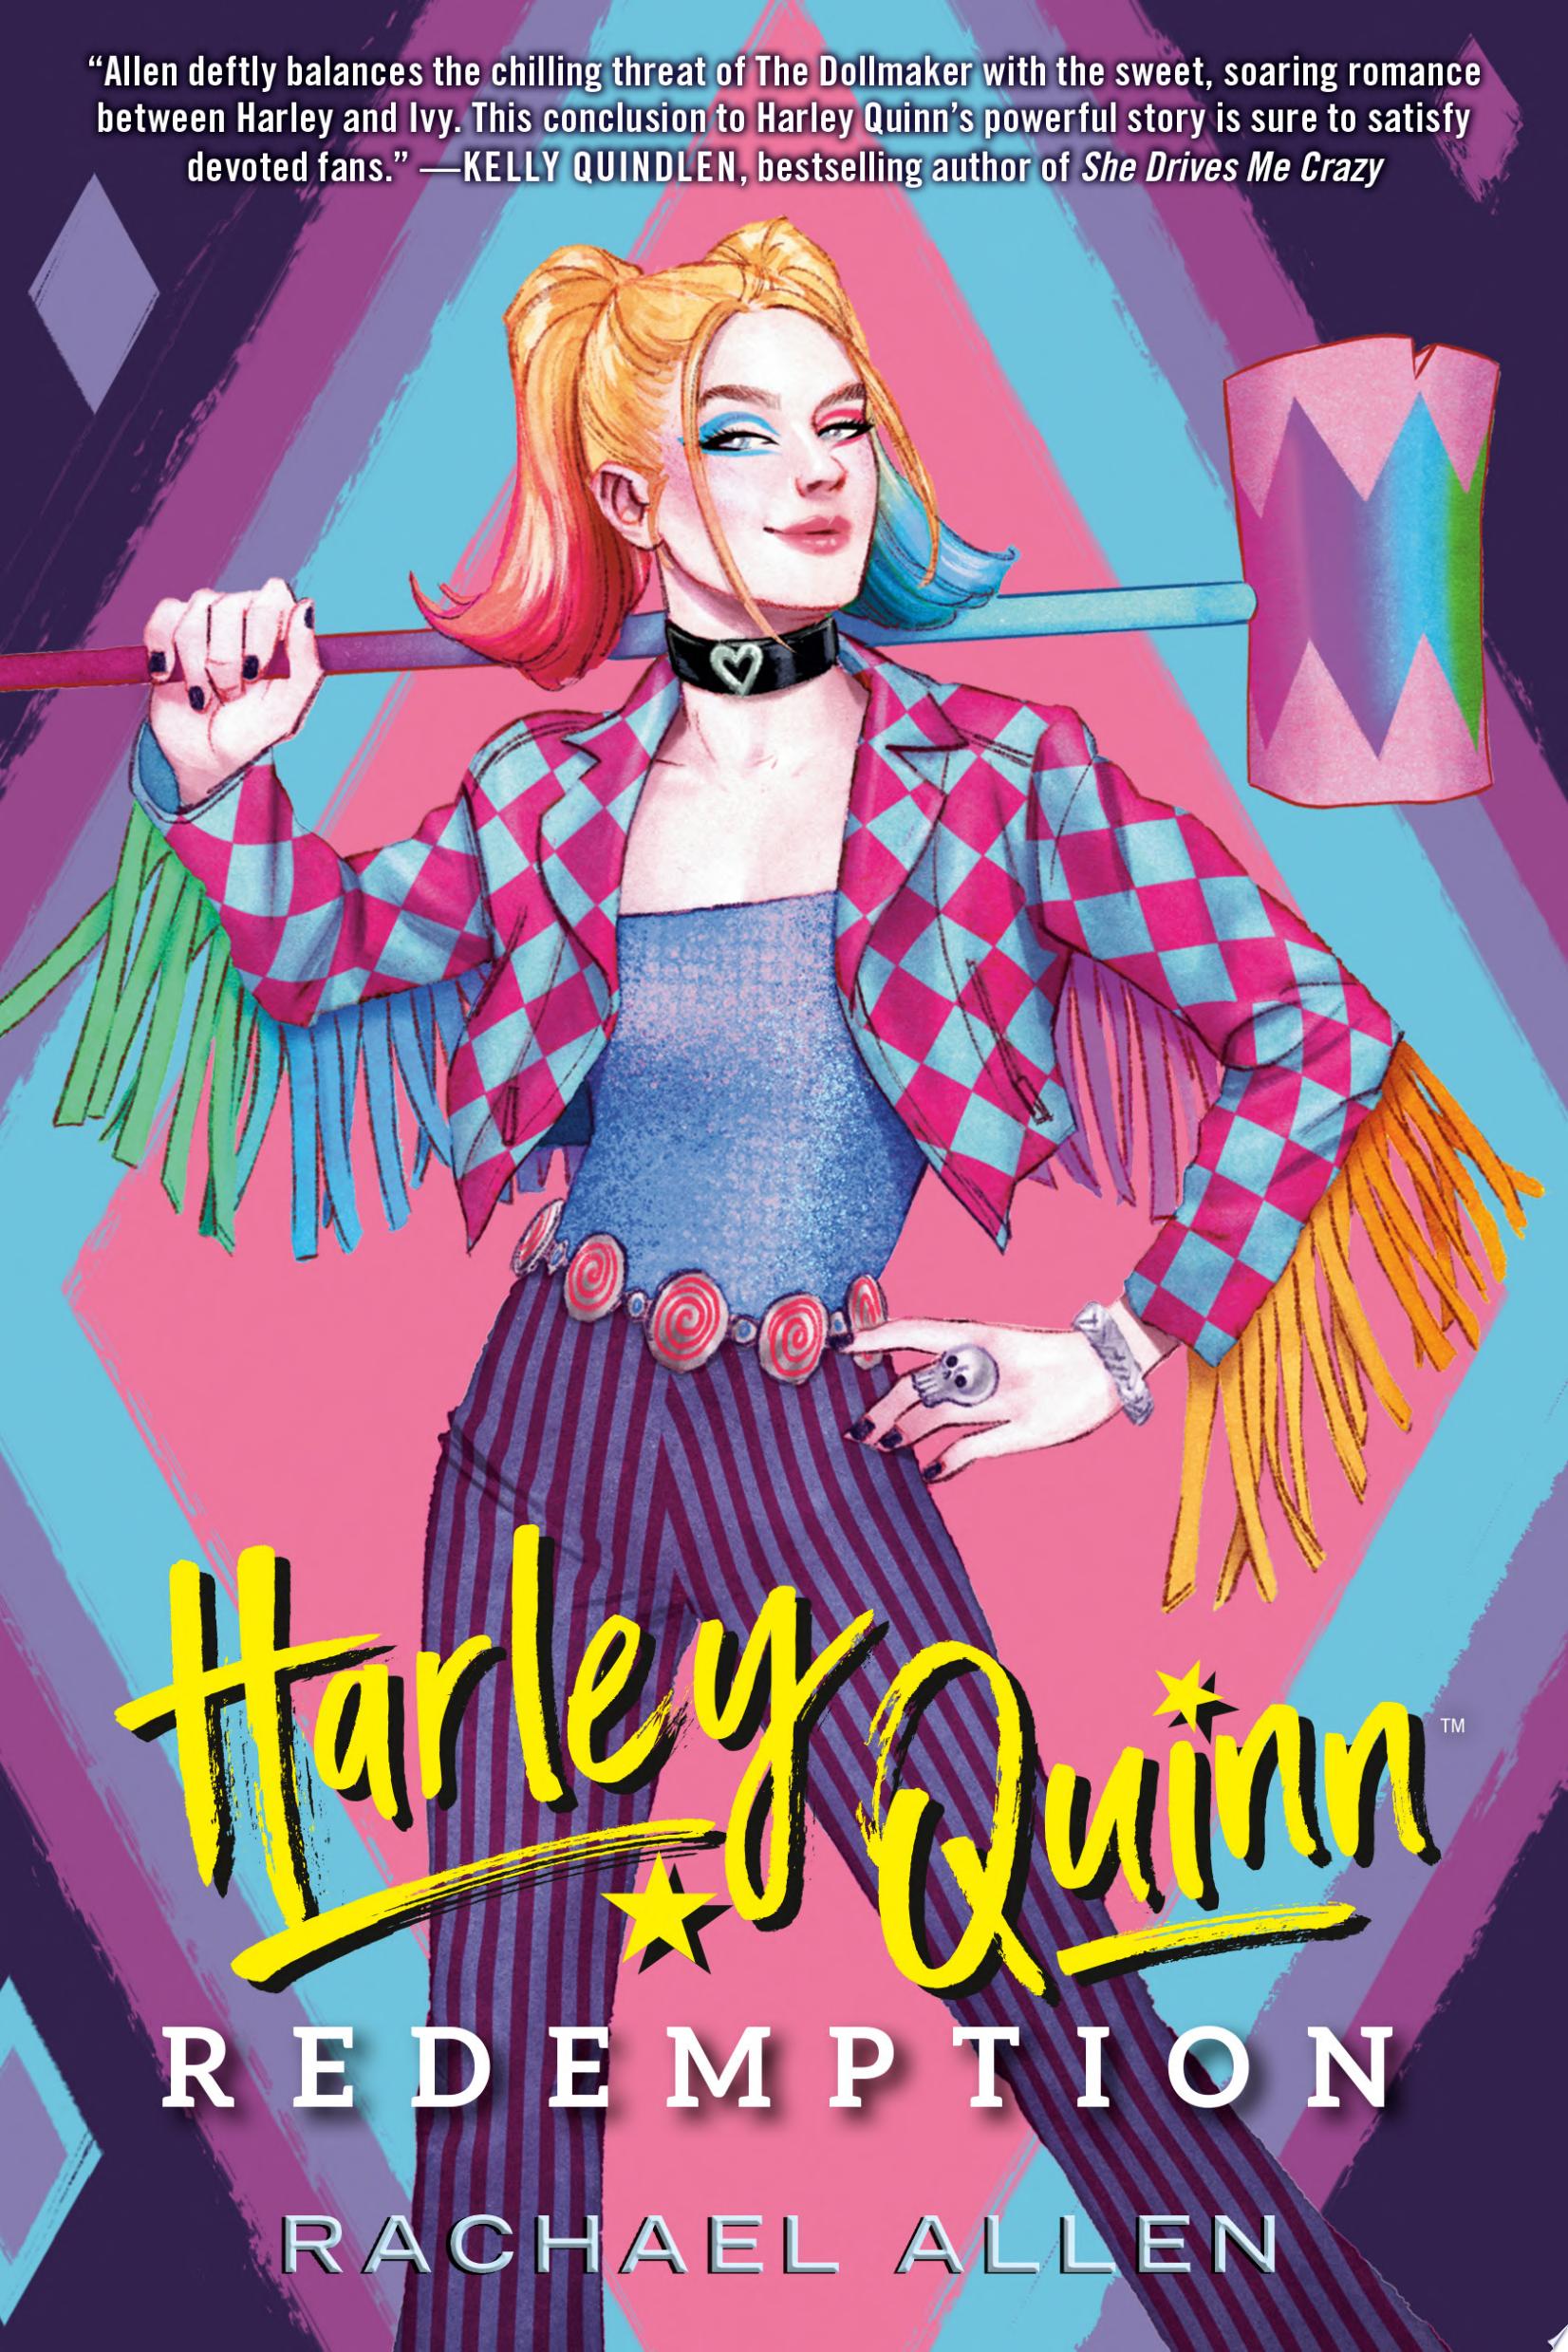 Image for "Harley Quinn: Redemption"